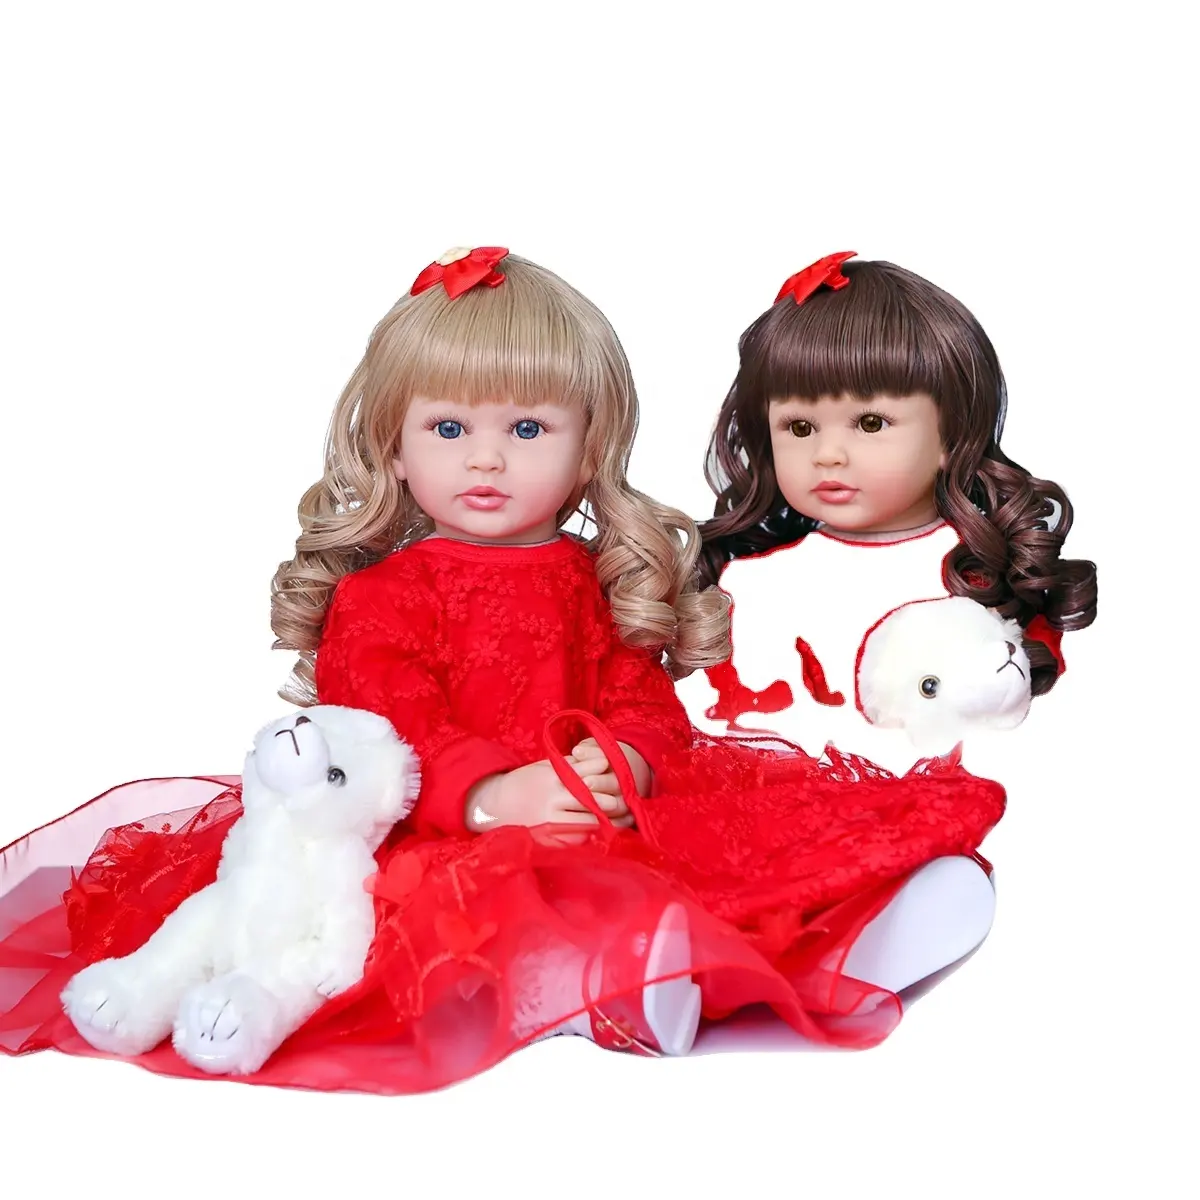 NPK ตุ๊กตาผ้าซิลิโคนเนื้อนิ่มขนาด60ซม.,ตุ๊กตาเด็กทารกเด็กวัยหัดเดินตุ๊กตาเหมือนเด็กทารกเกิดใหม่ในชุดเดรสสีแดงผมสองสี